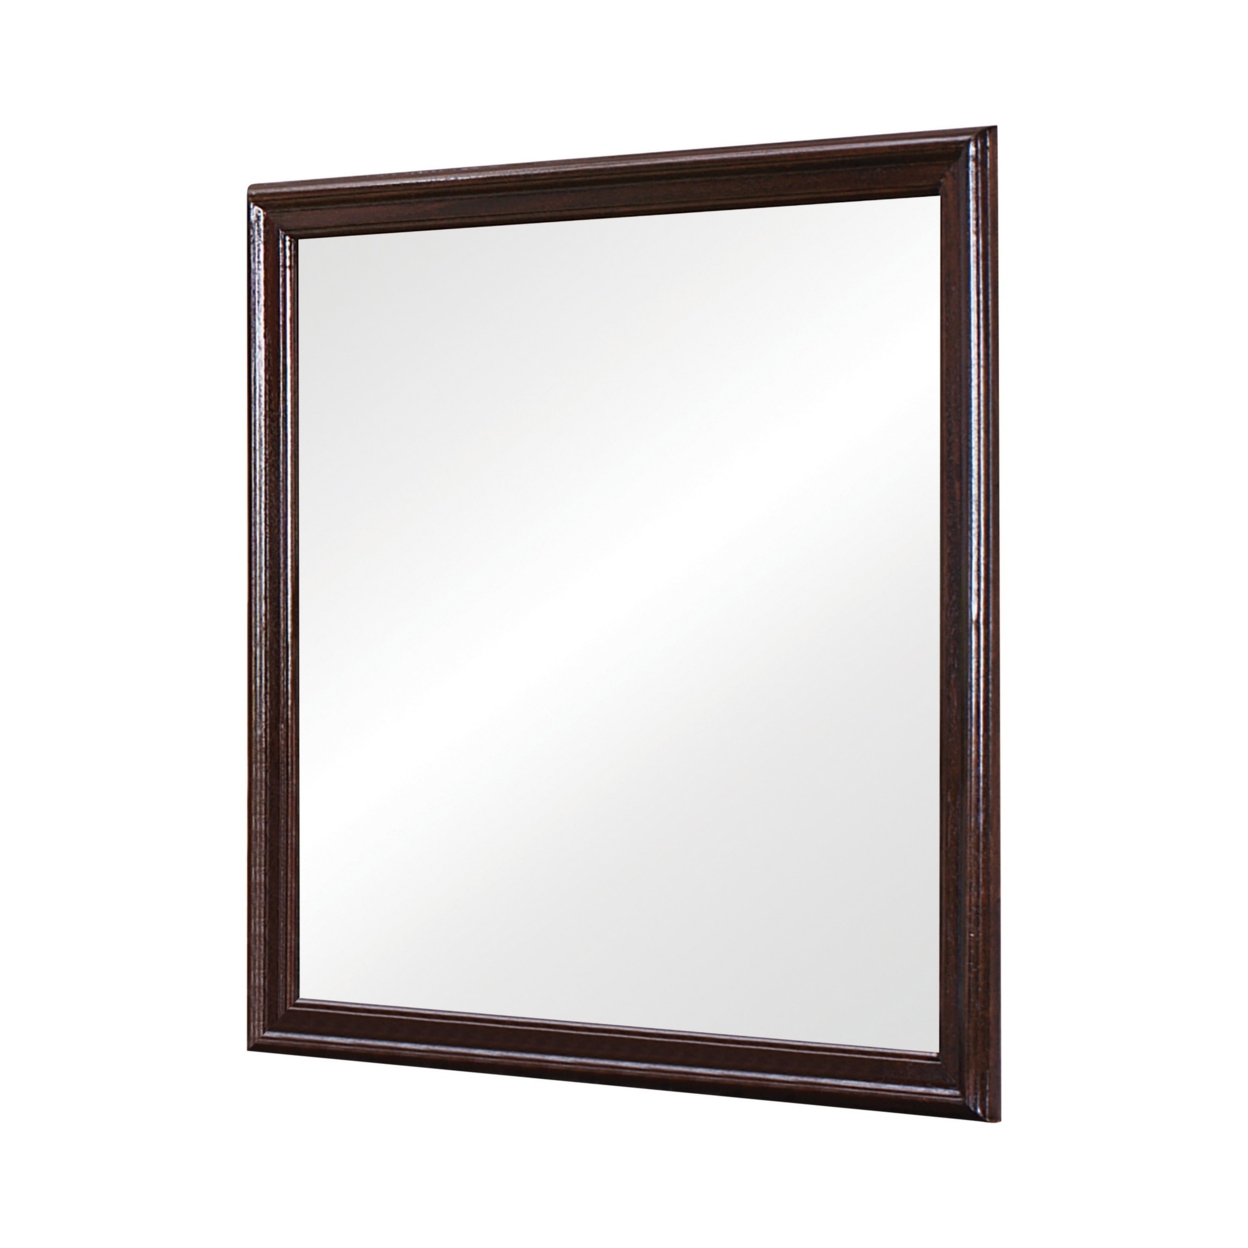 Molded Wooden Frame Mirror With Mounting Hardware, Dark Brown- Saltoro Sherpi